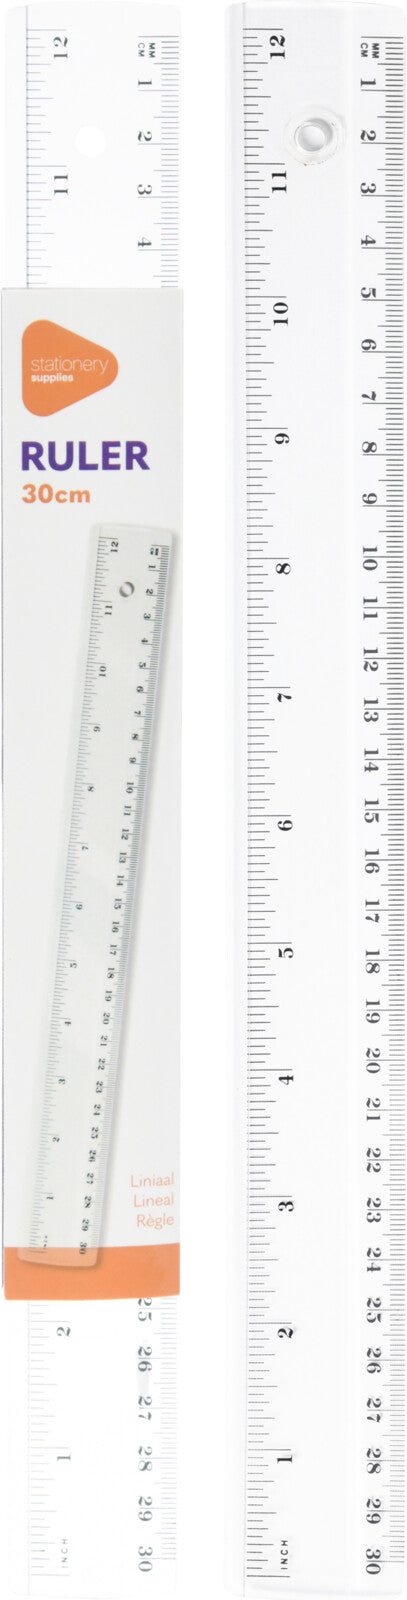 Stationary Supplies Liniaal 30cm